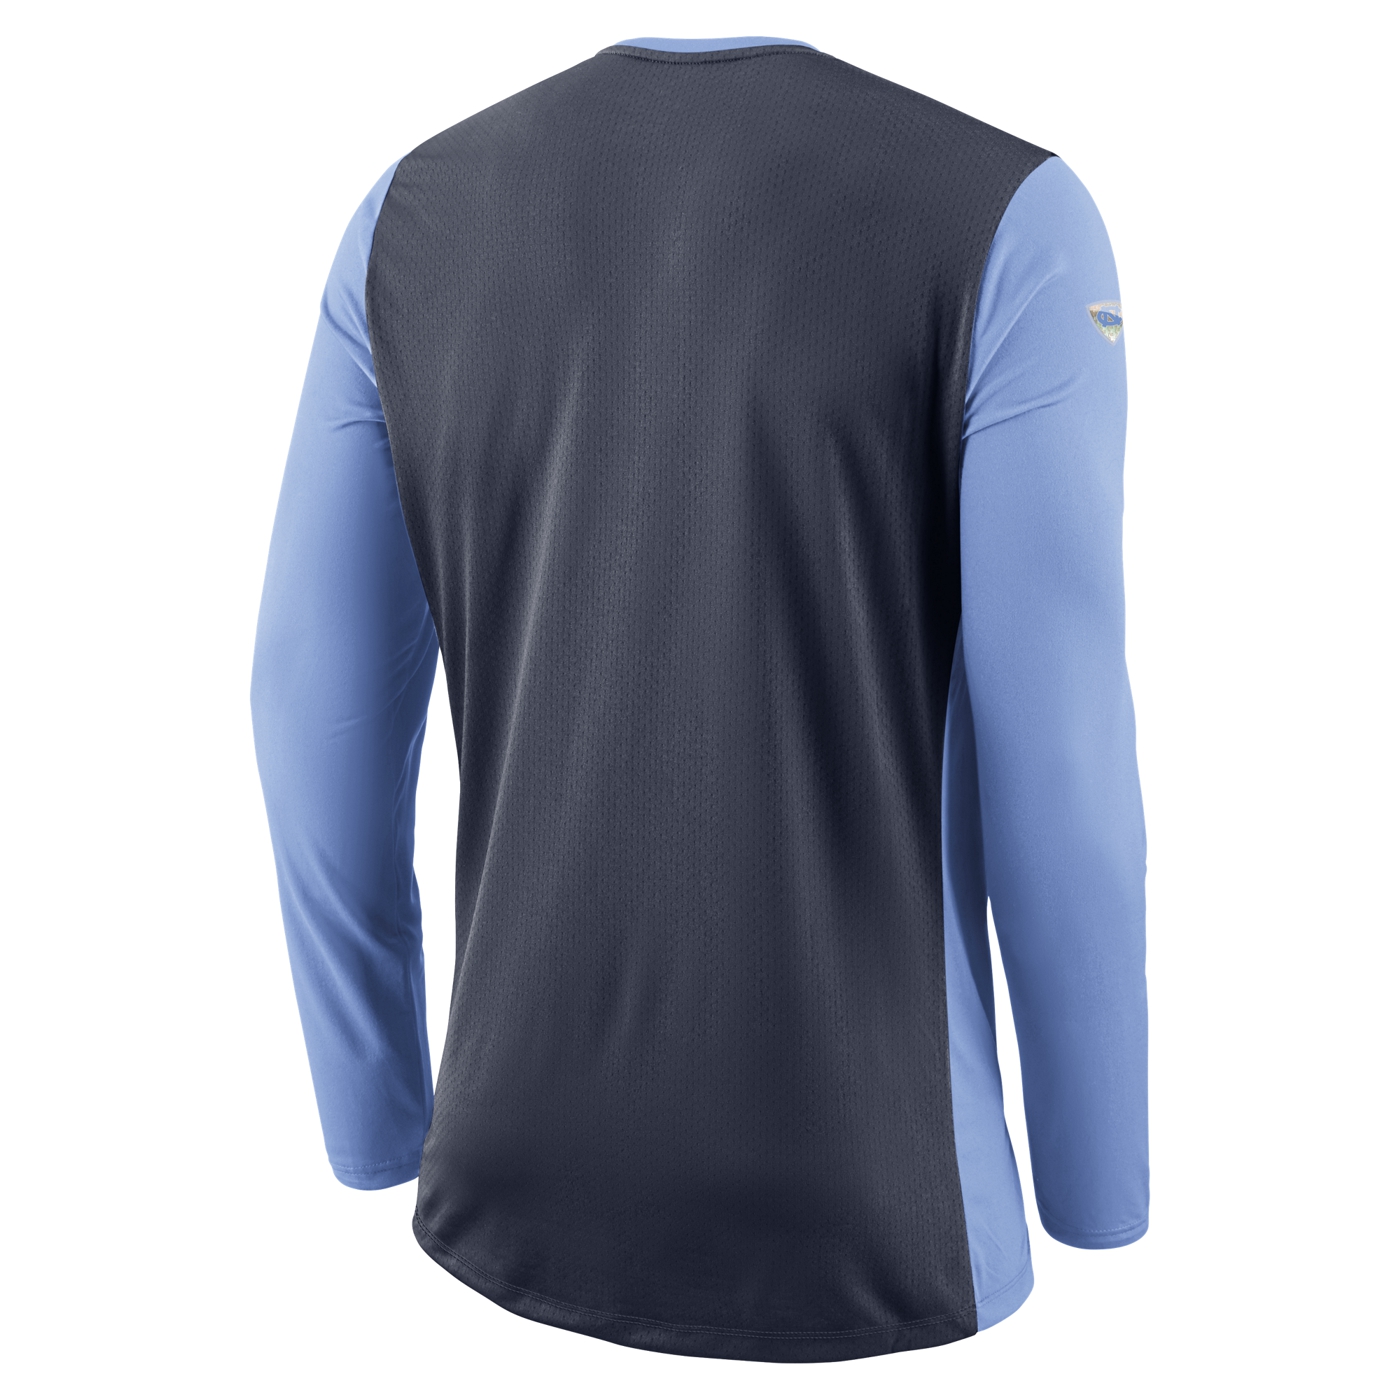 Johnny T-shirt - North Carolina Tar Heels - SALE ITEMS - Nike Long ...